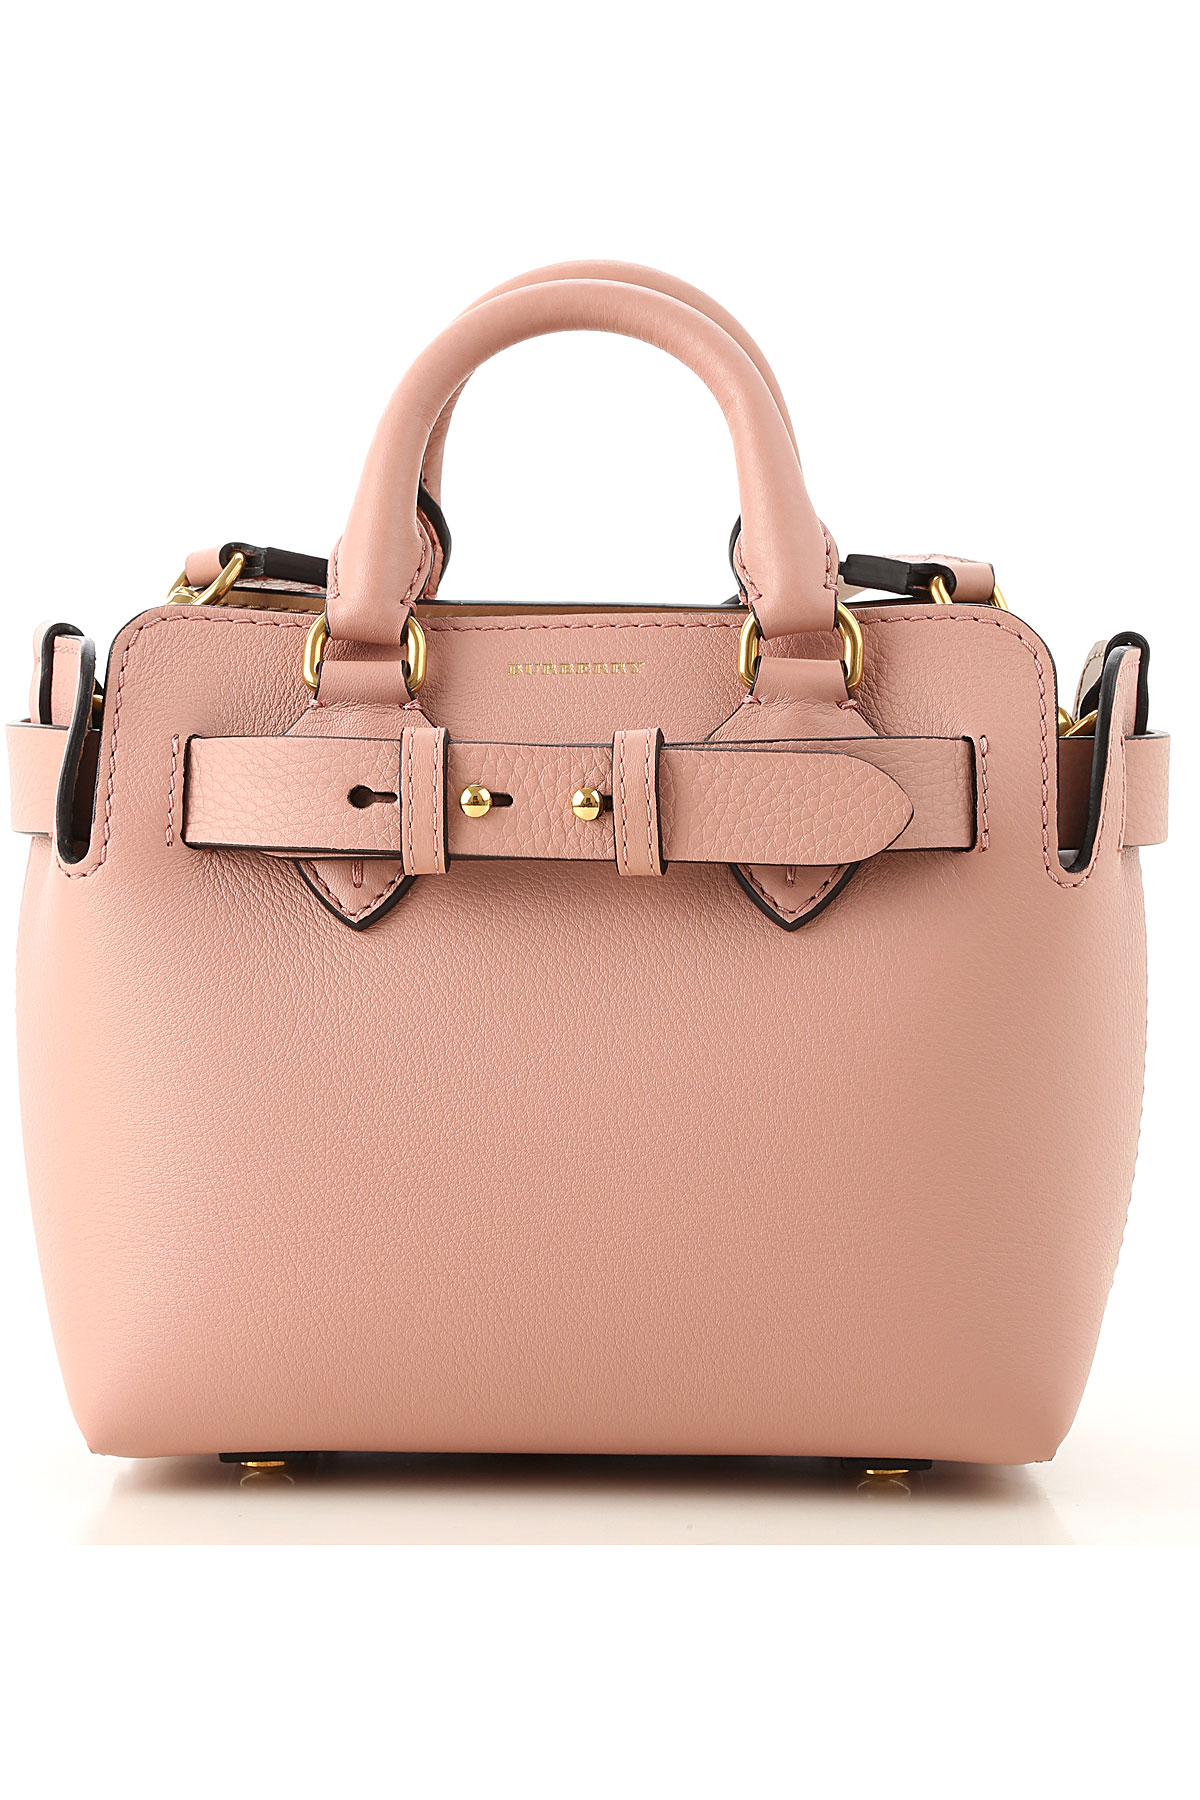 Handbags Burberry, Style code: 8007931--